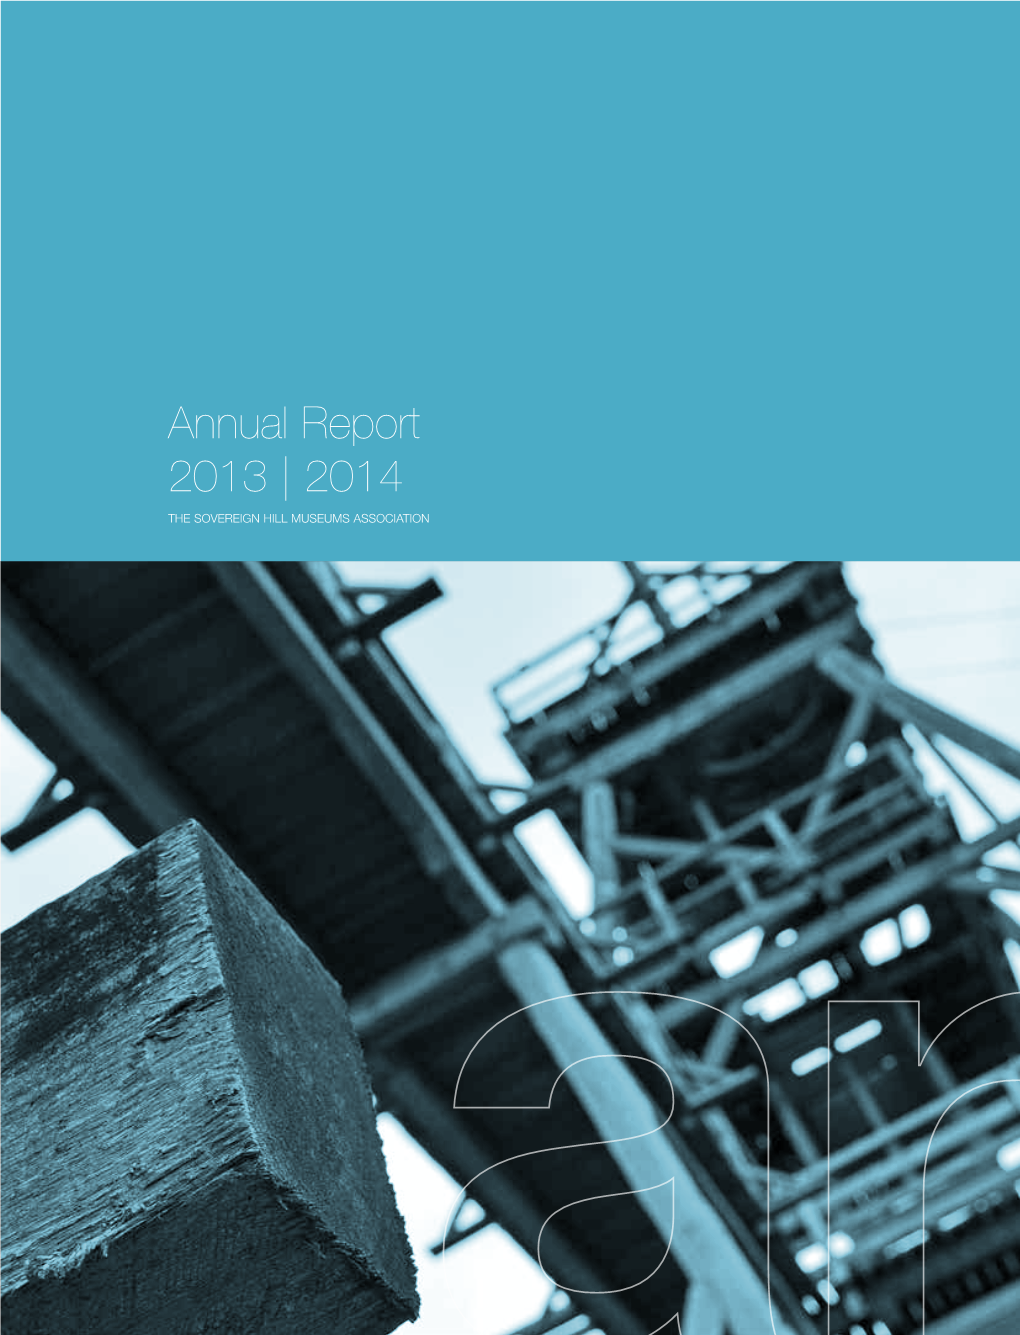 Annual Report 2013 | 2014